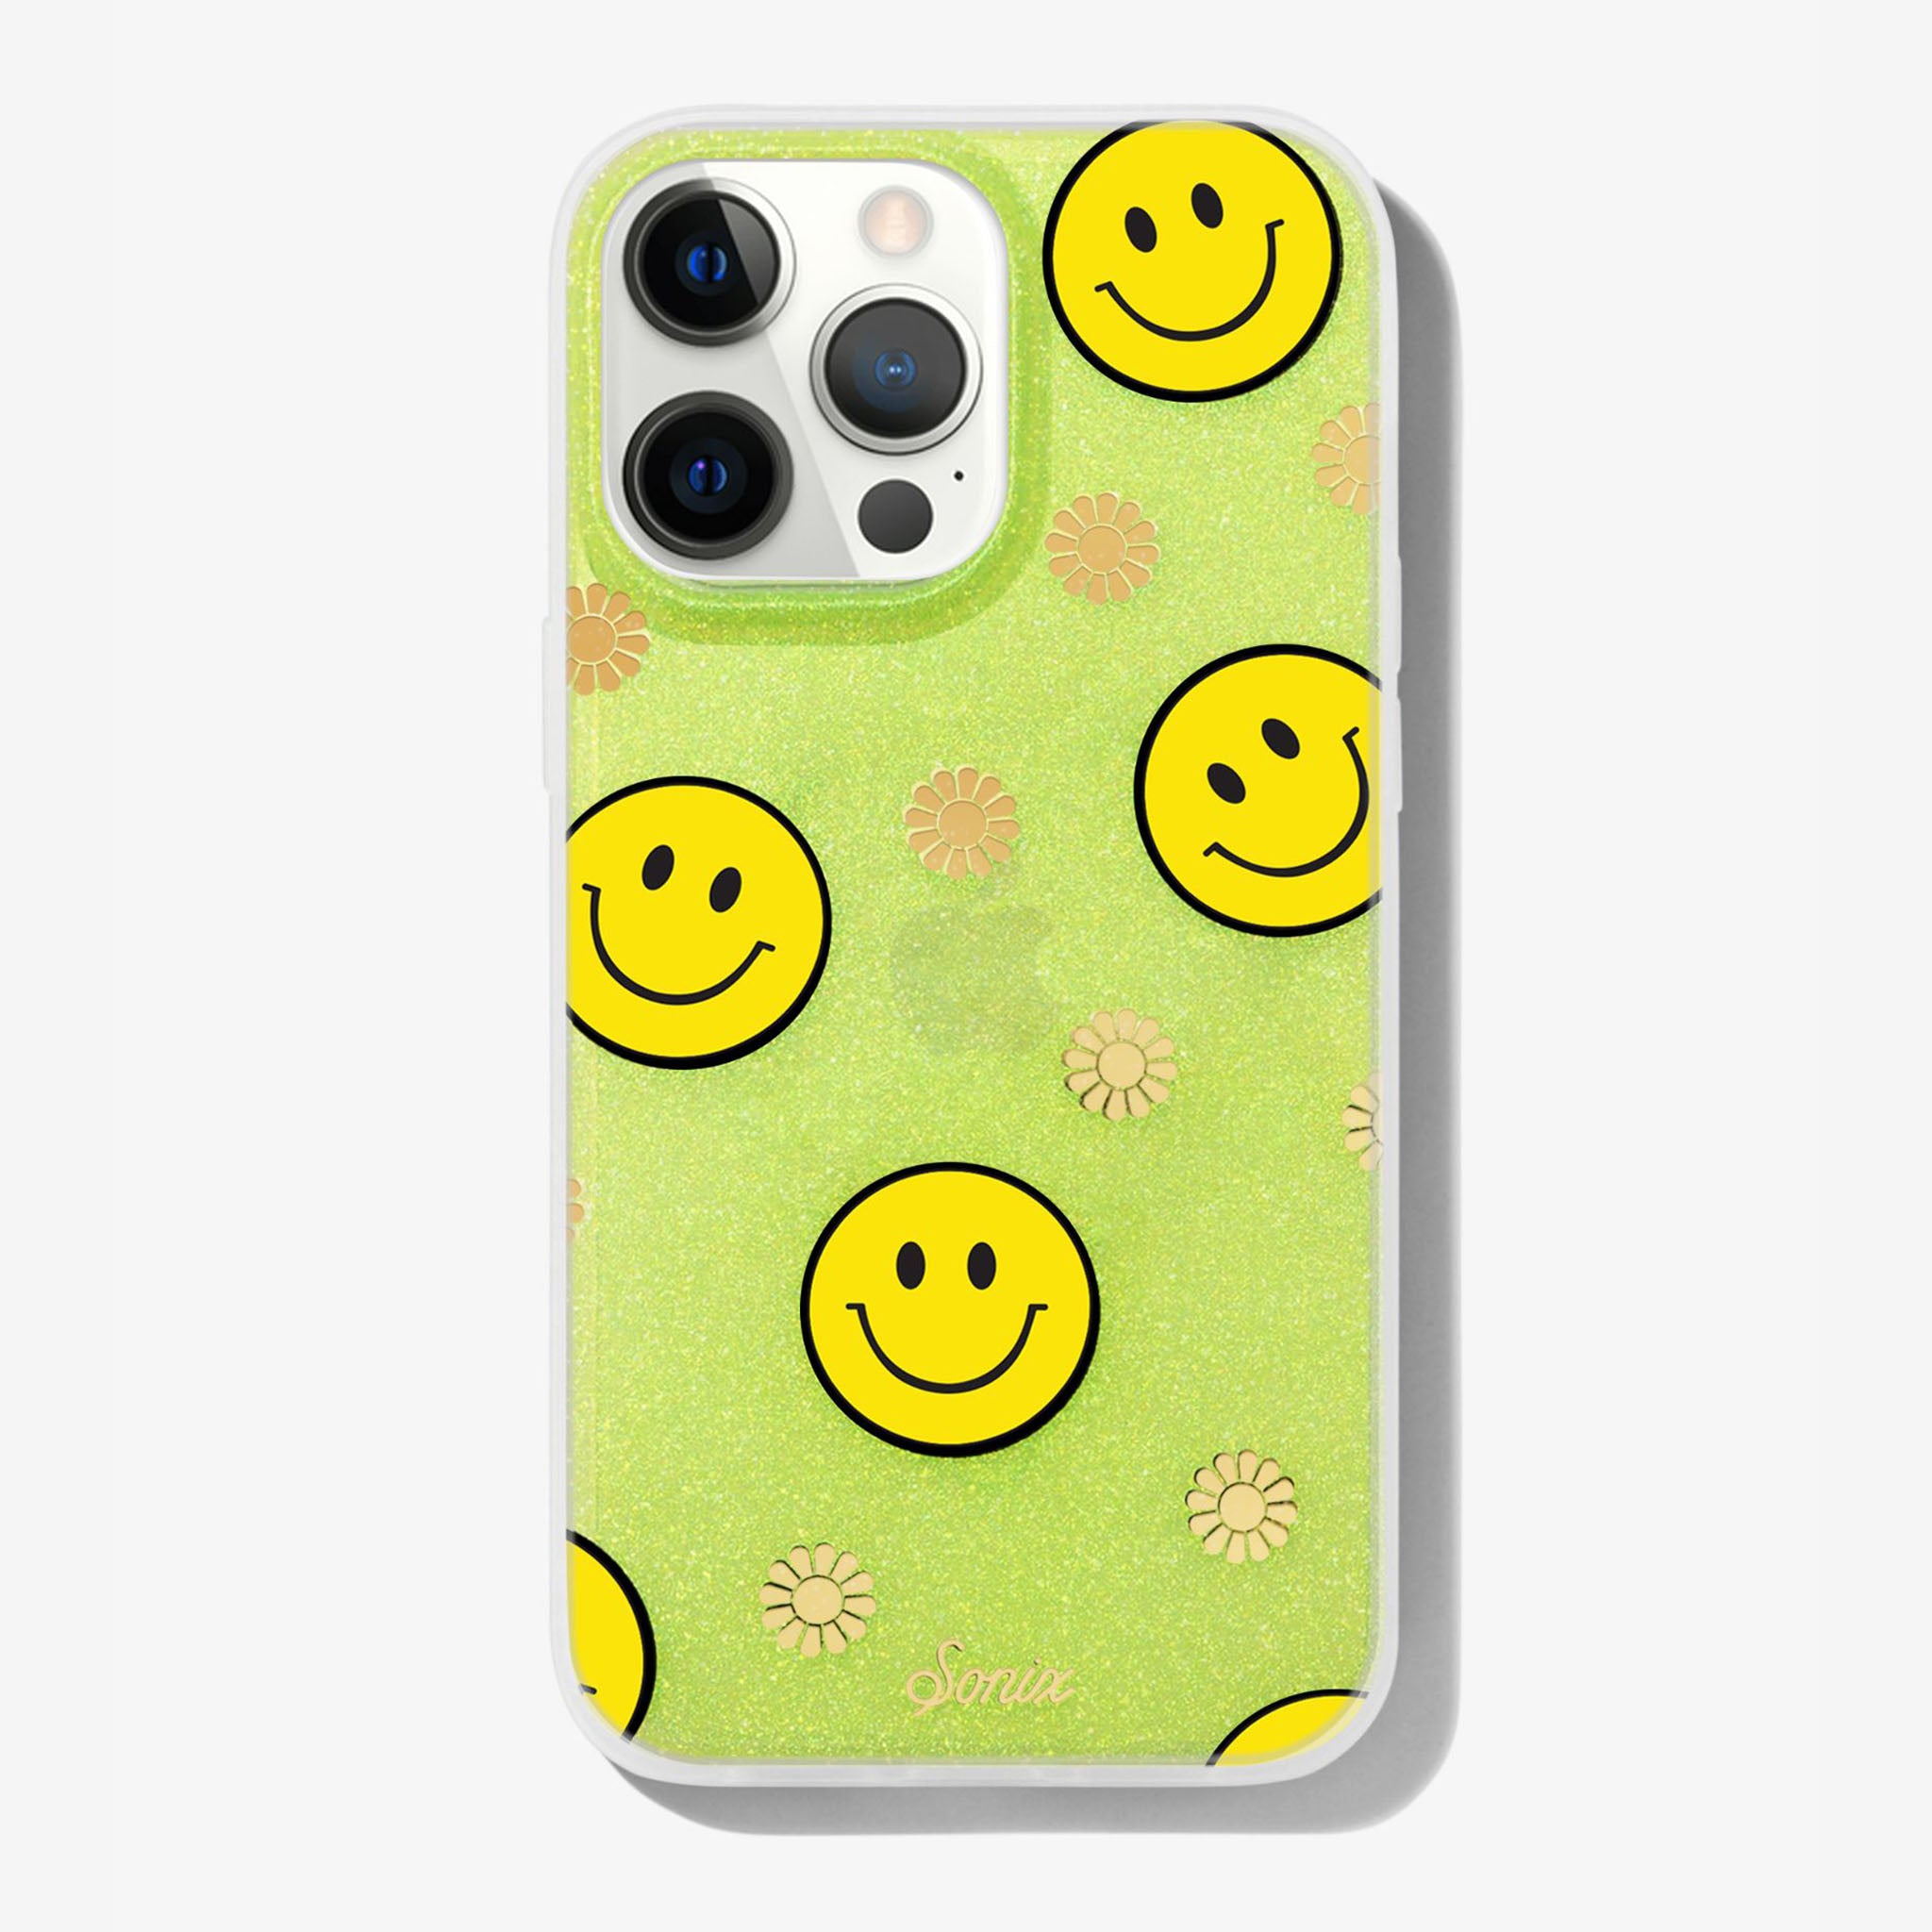 Neon Smiley Yellow iPhone Case